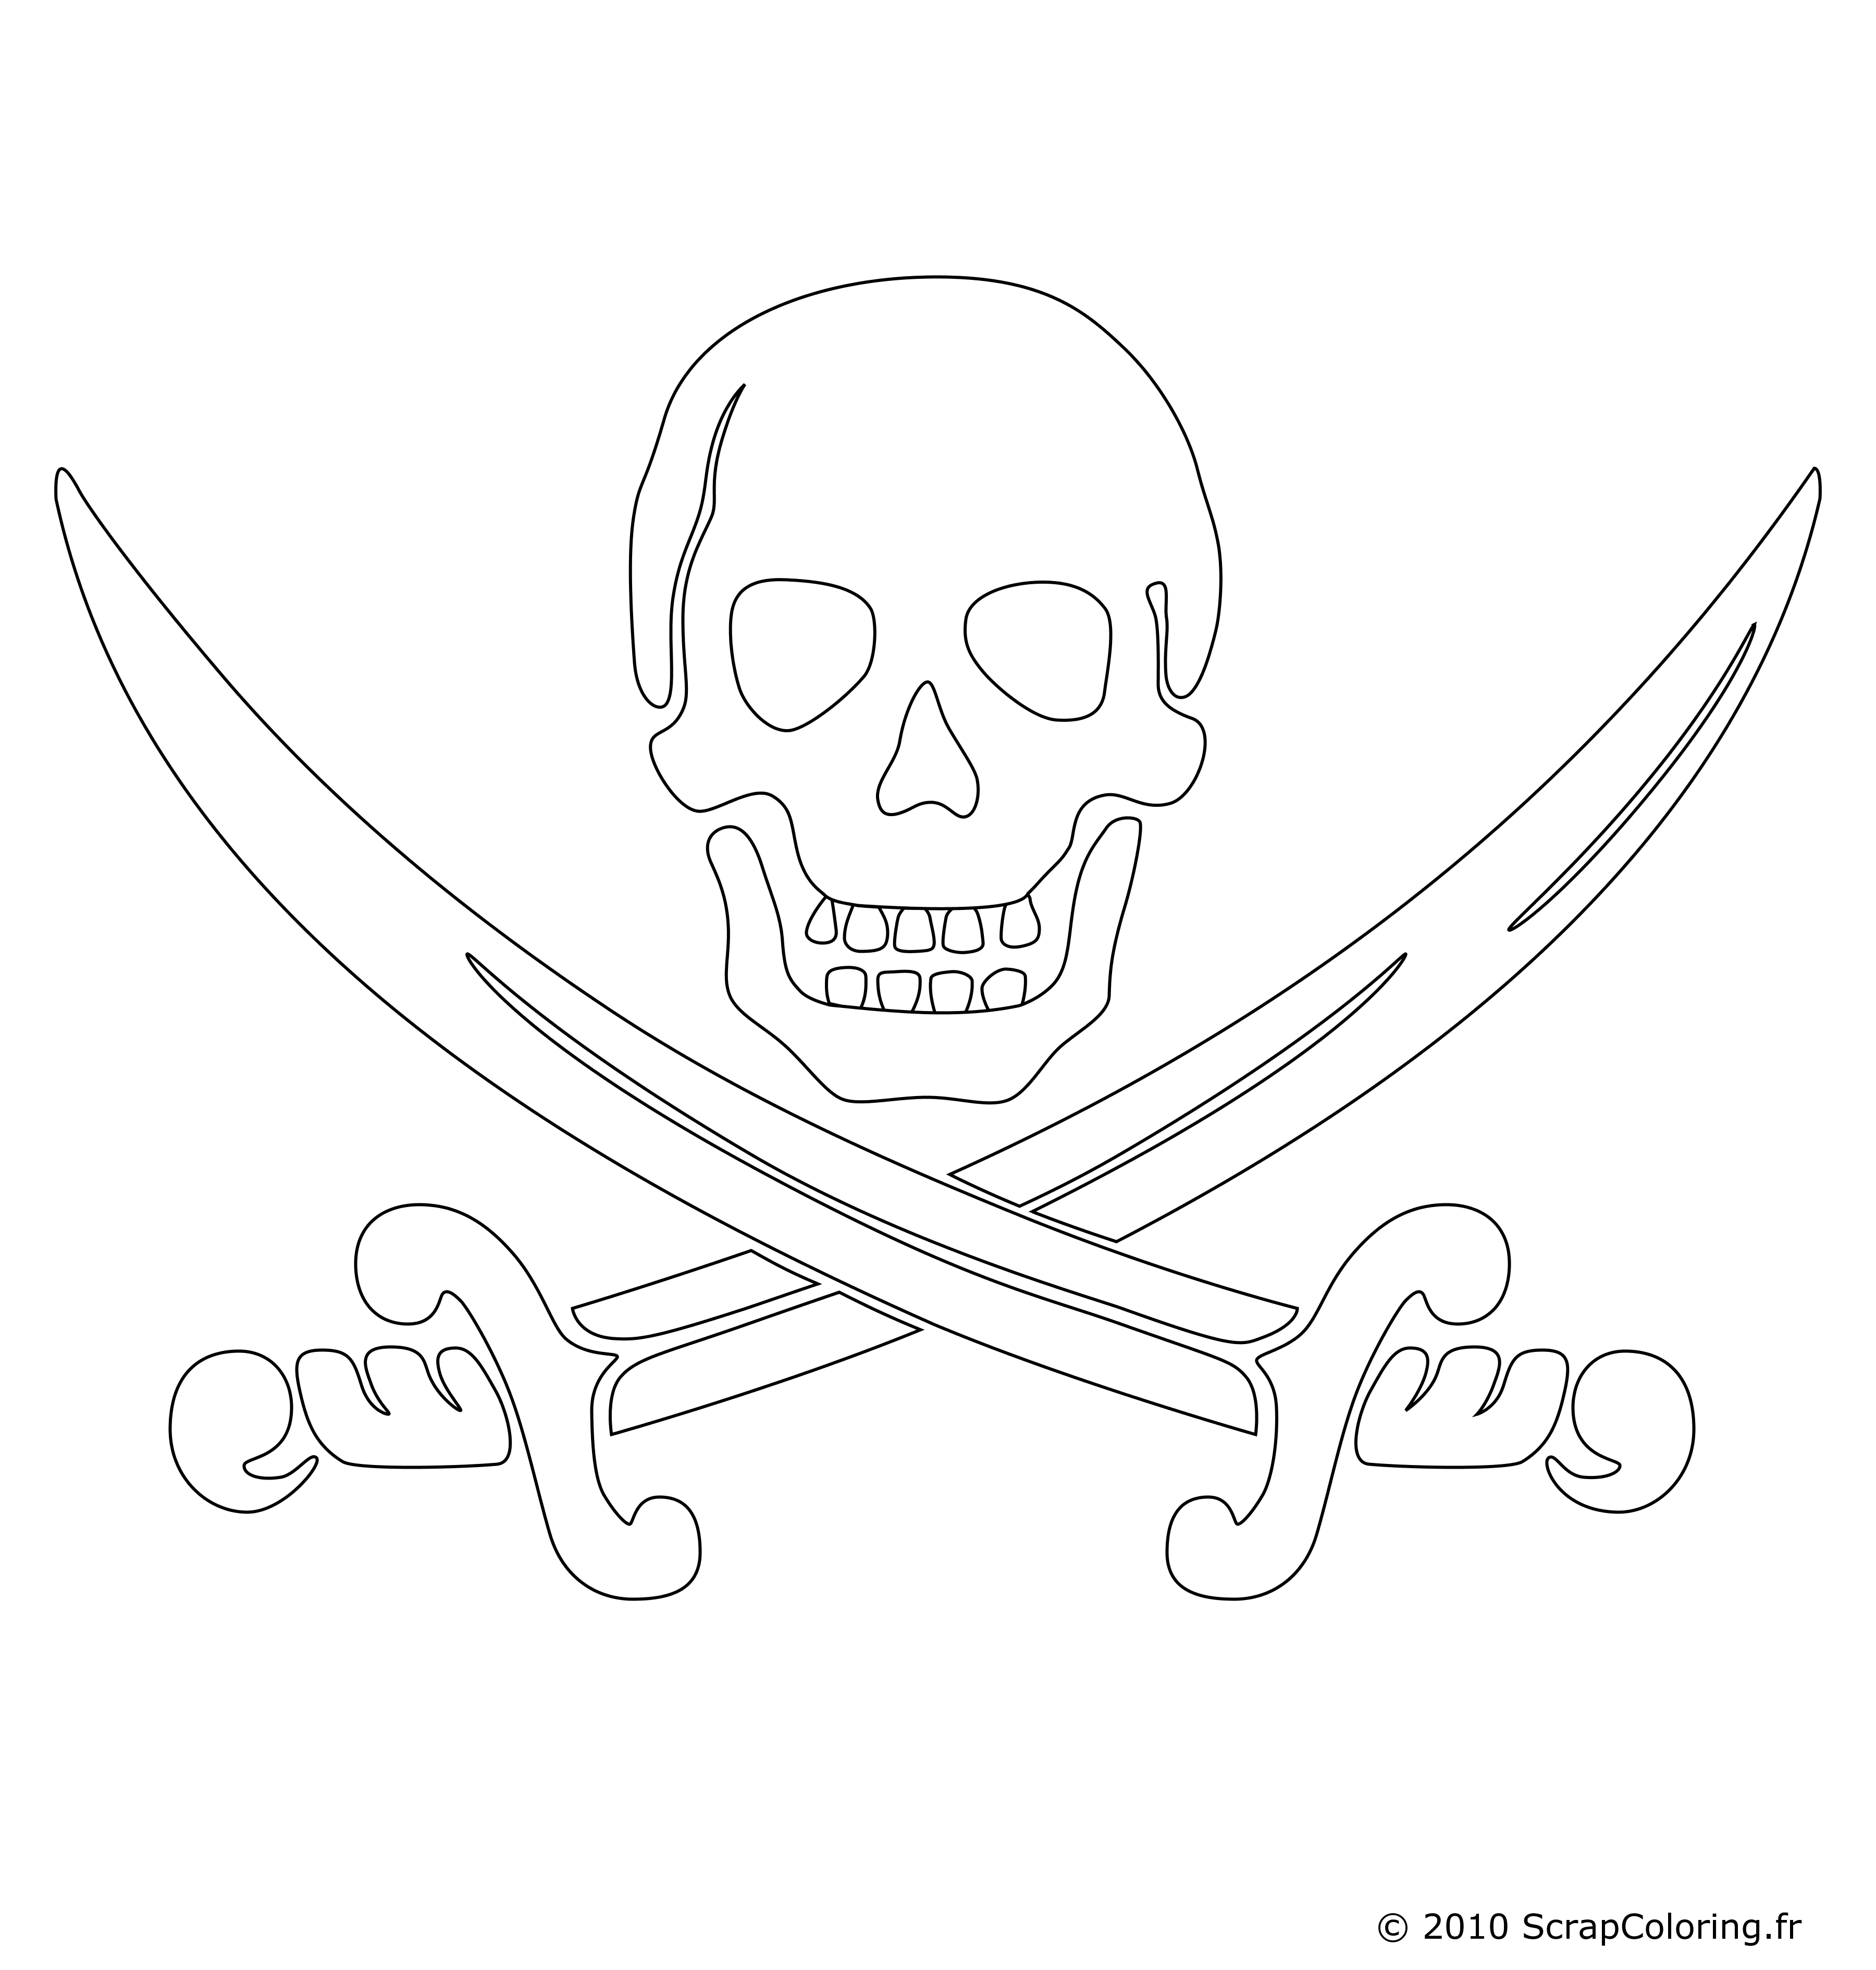 coloriage drapeau pirate